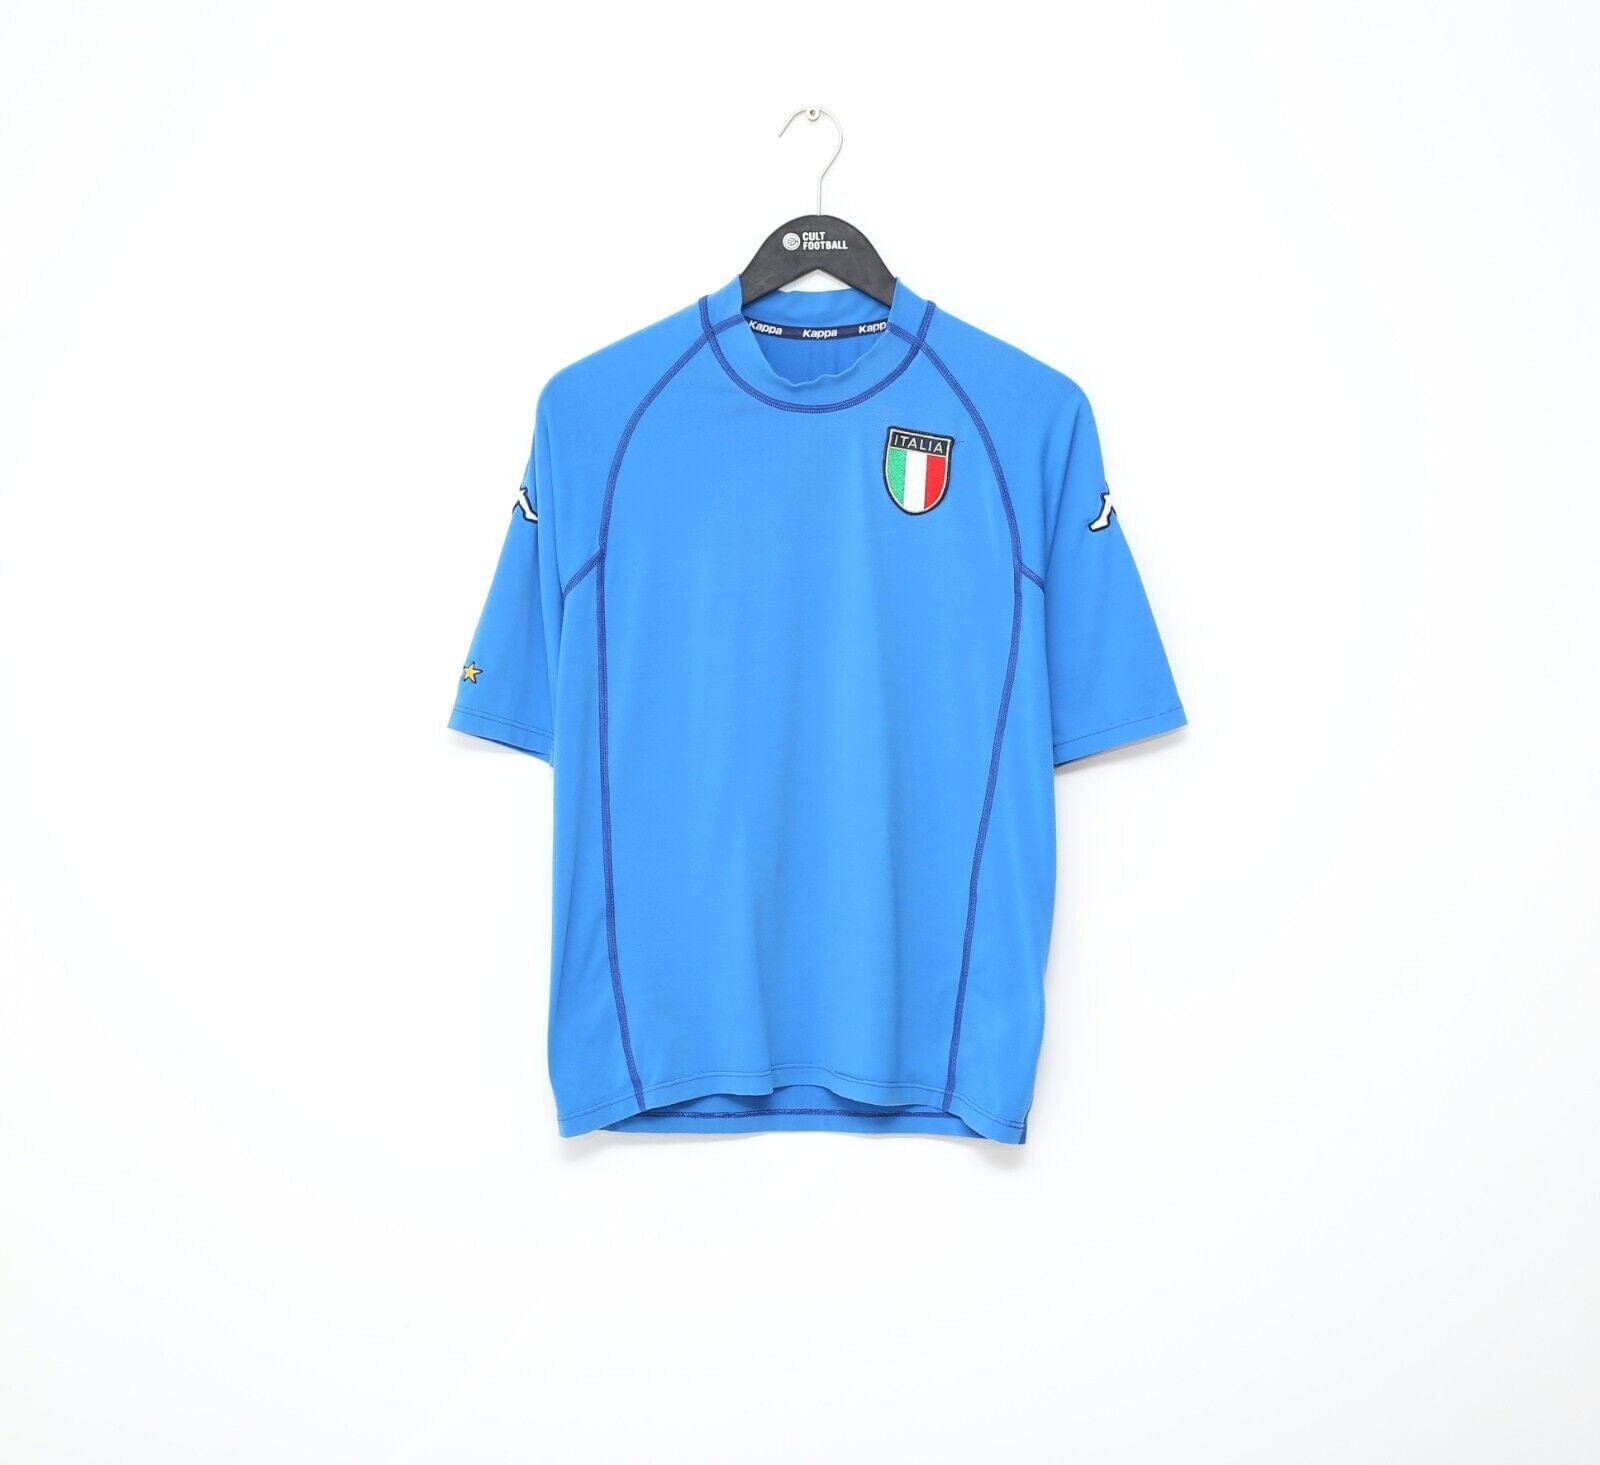 2002 Vintage Kappa Combat Football Shirt (M) - Football Shirt Collective